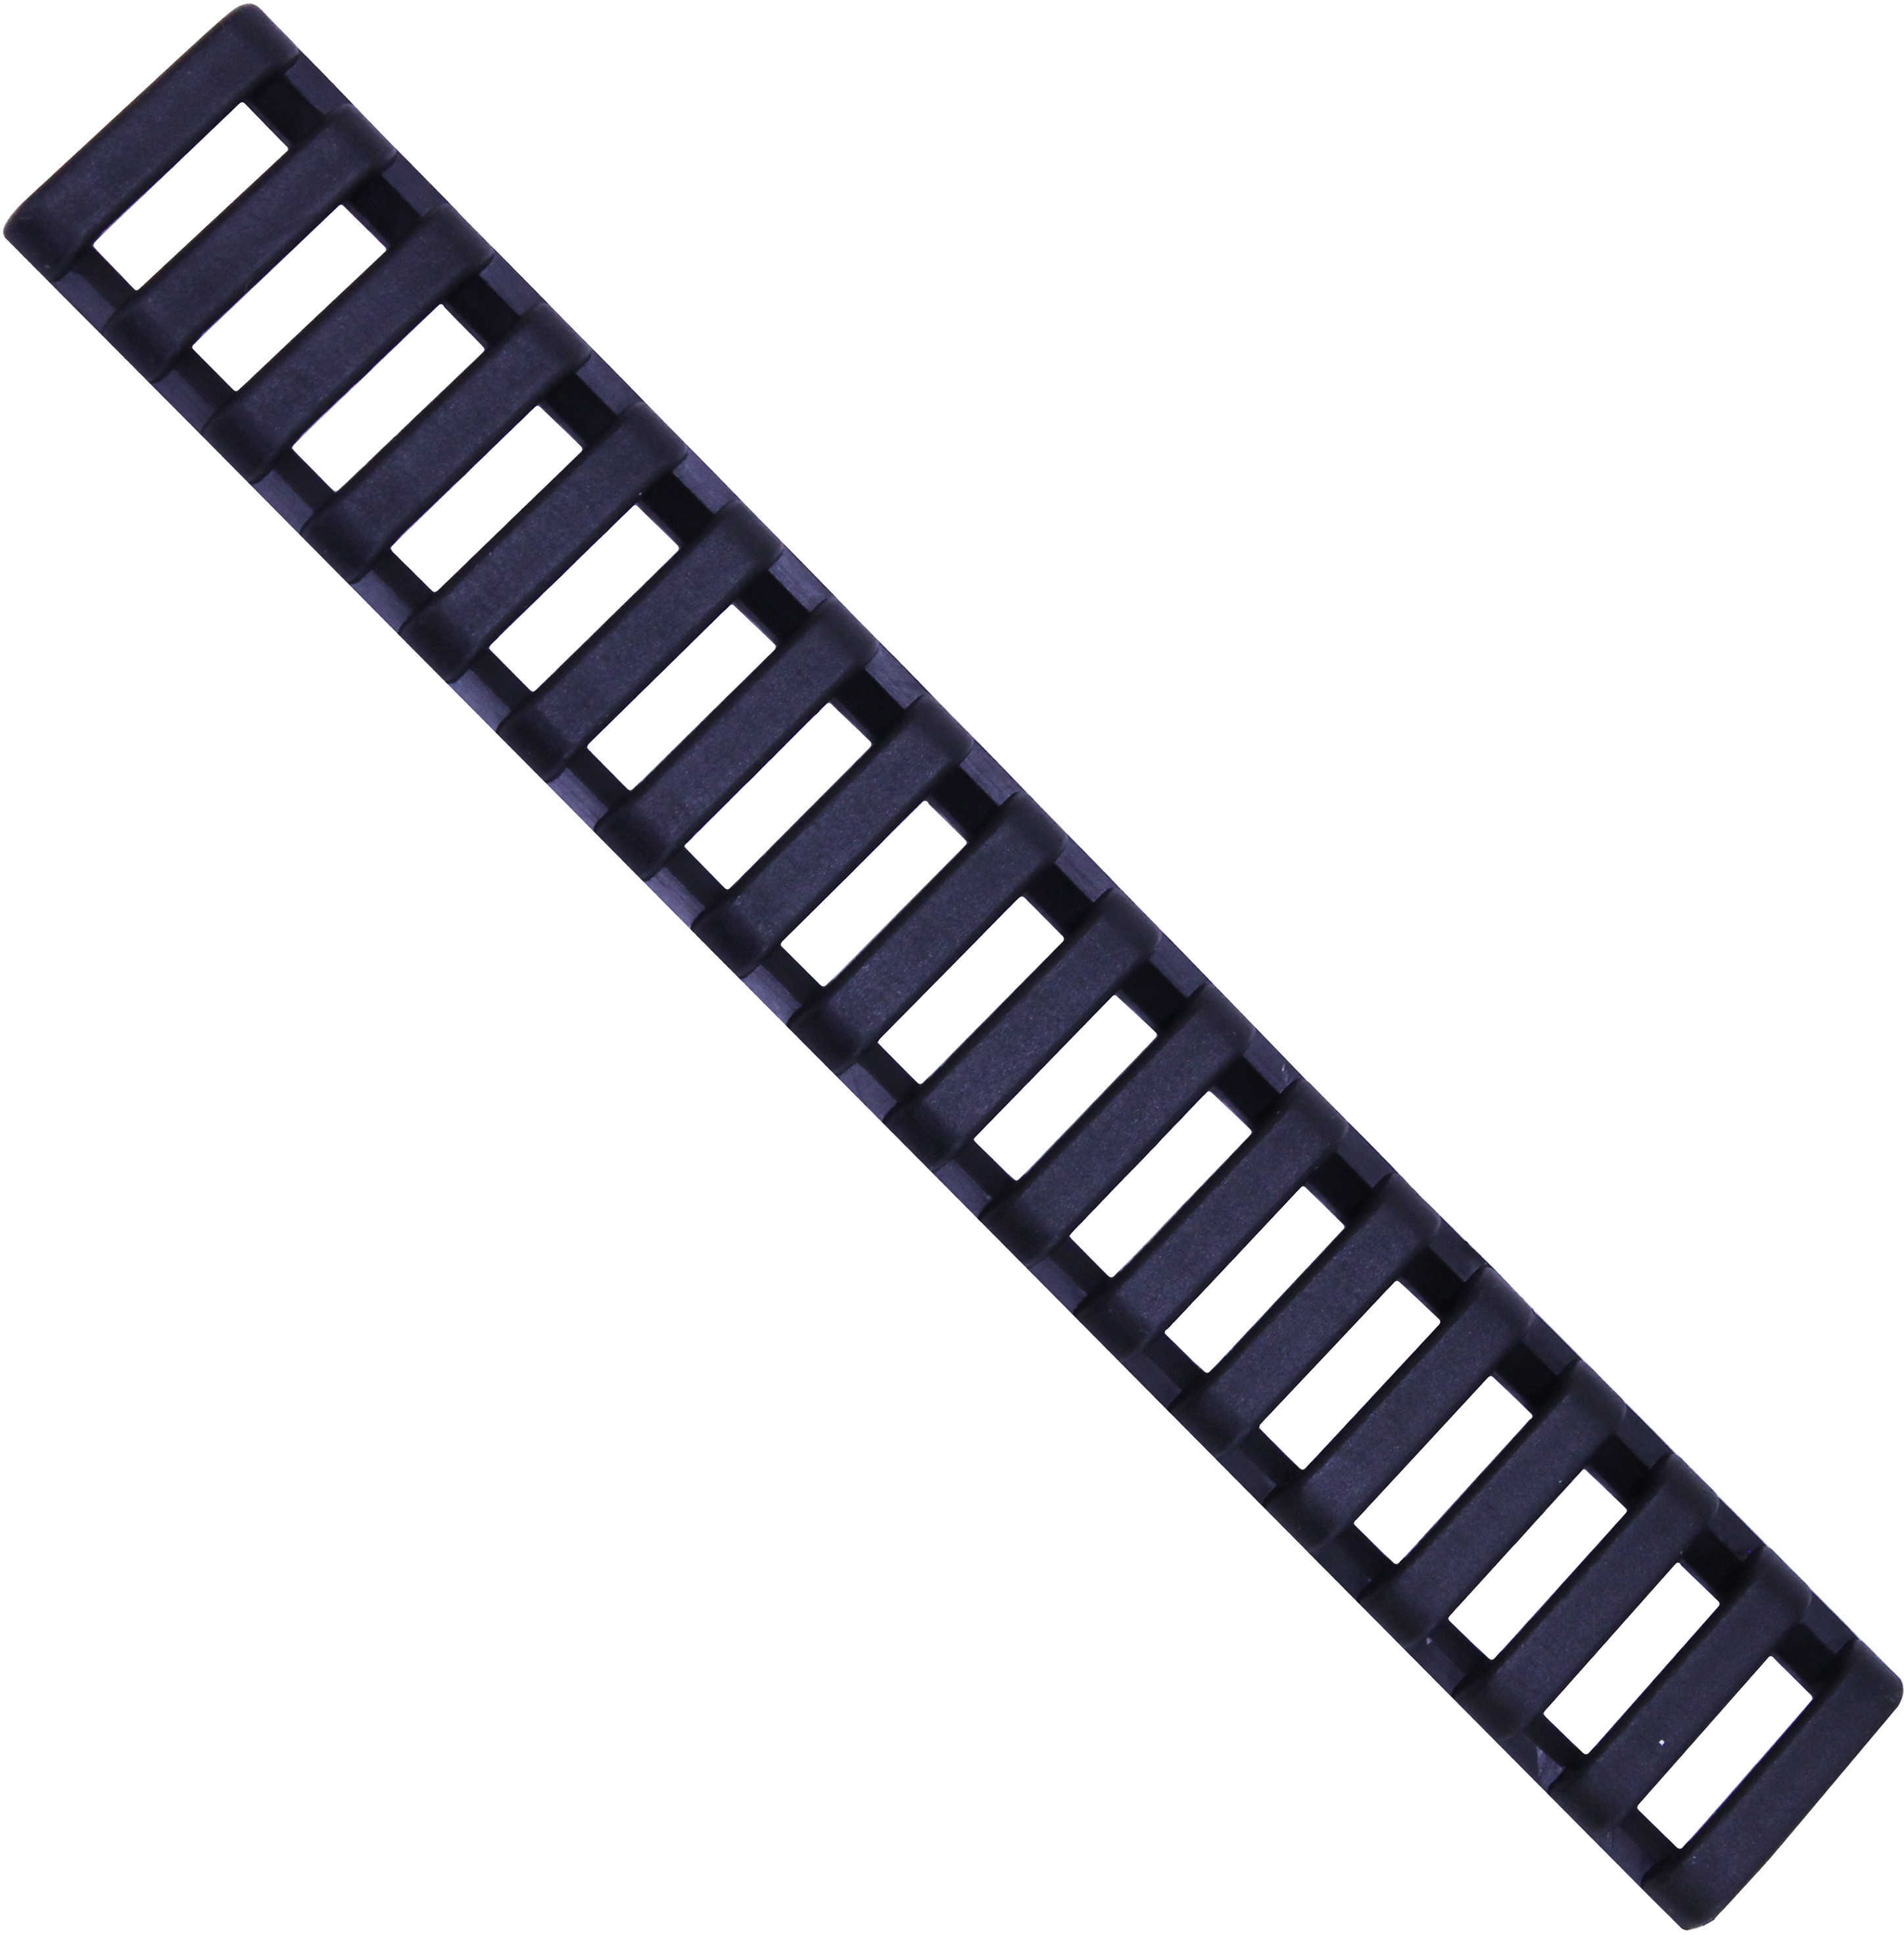 Ergo Ext Rail Length Protector Accessory Black Covers 18 Slot Ladder 4373-3PKBK